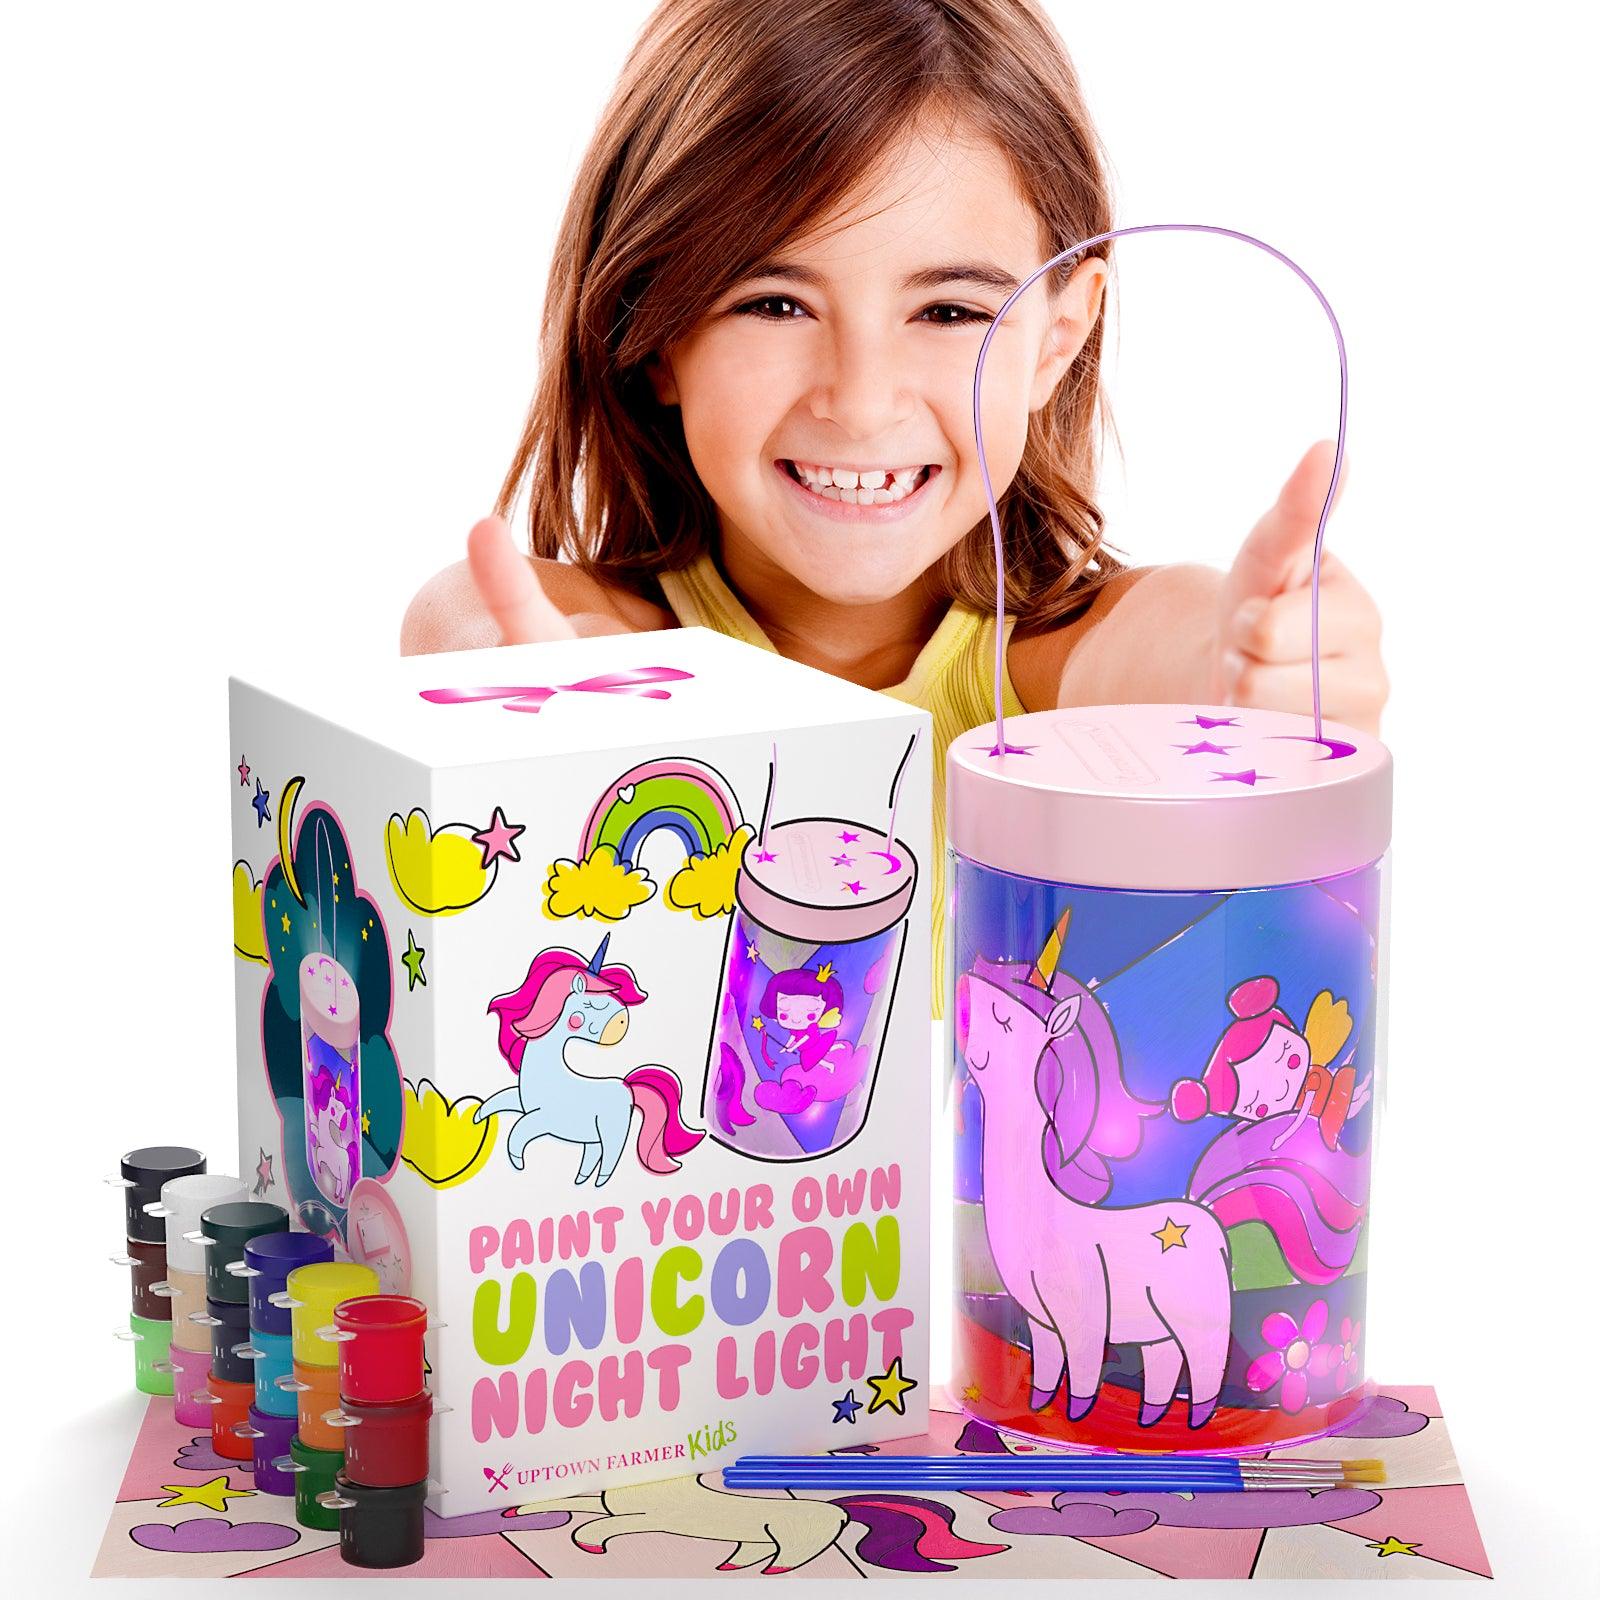 Unicorn Night Light - Paint Your Own Unicorn Night Kit - Uptown Farmer